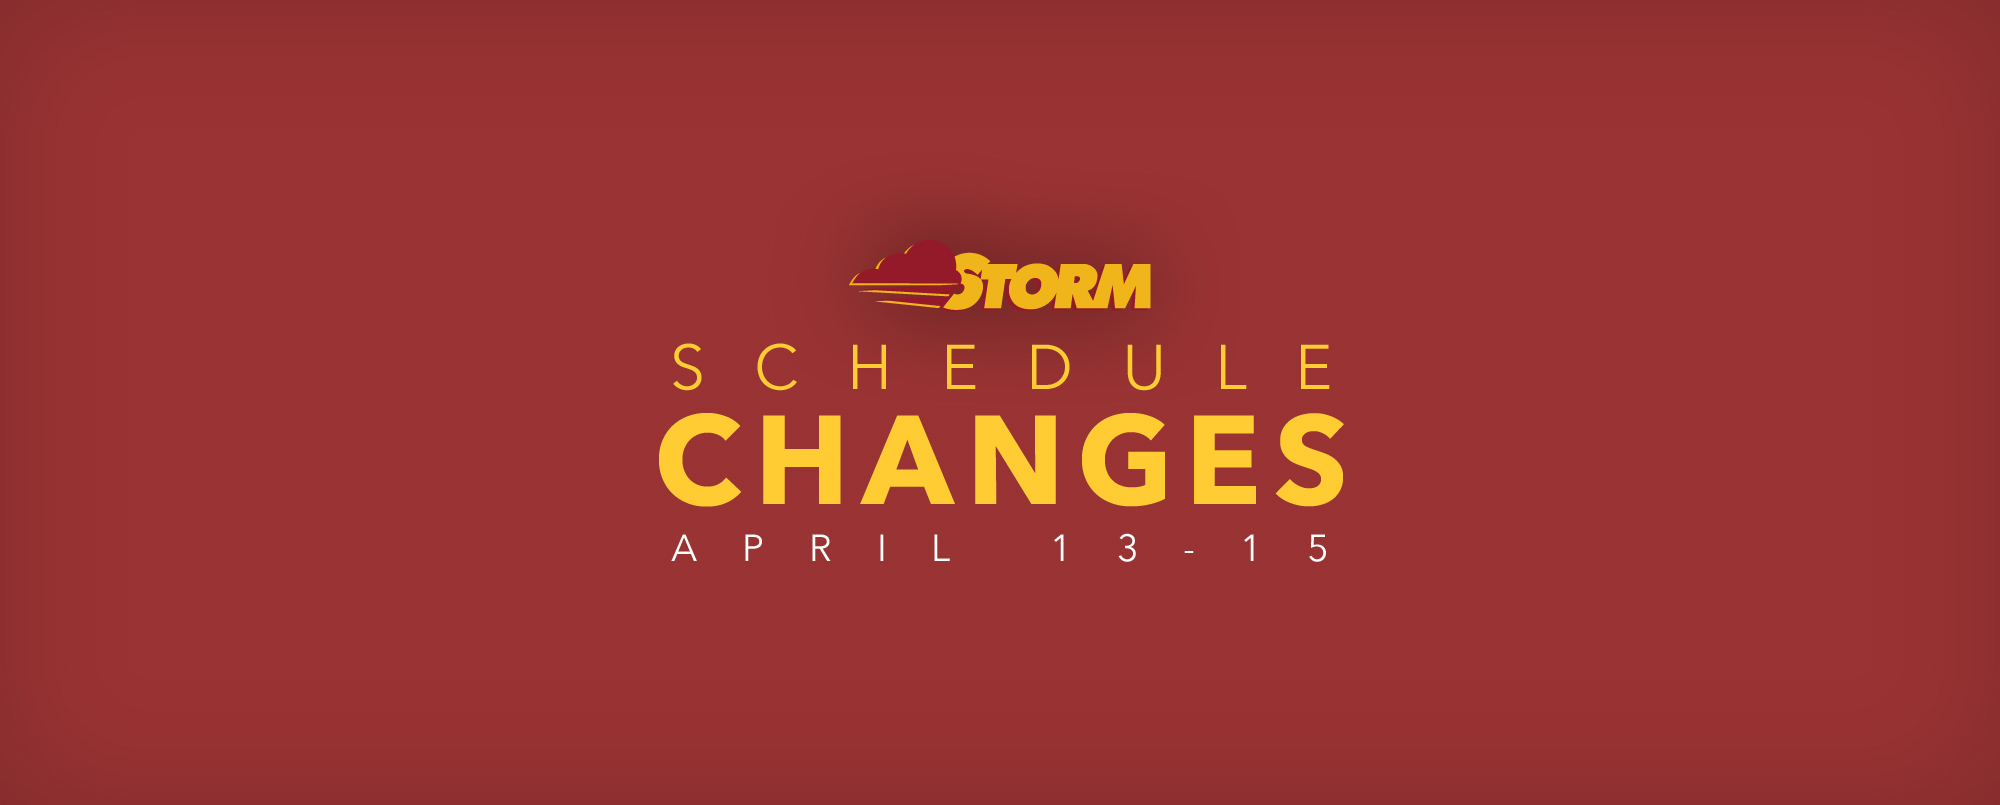 Schedule Changes: Weekend of April 13-15